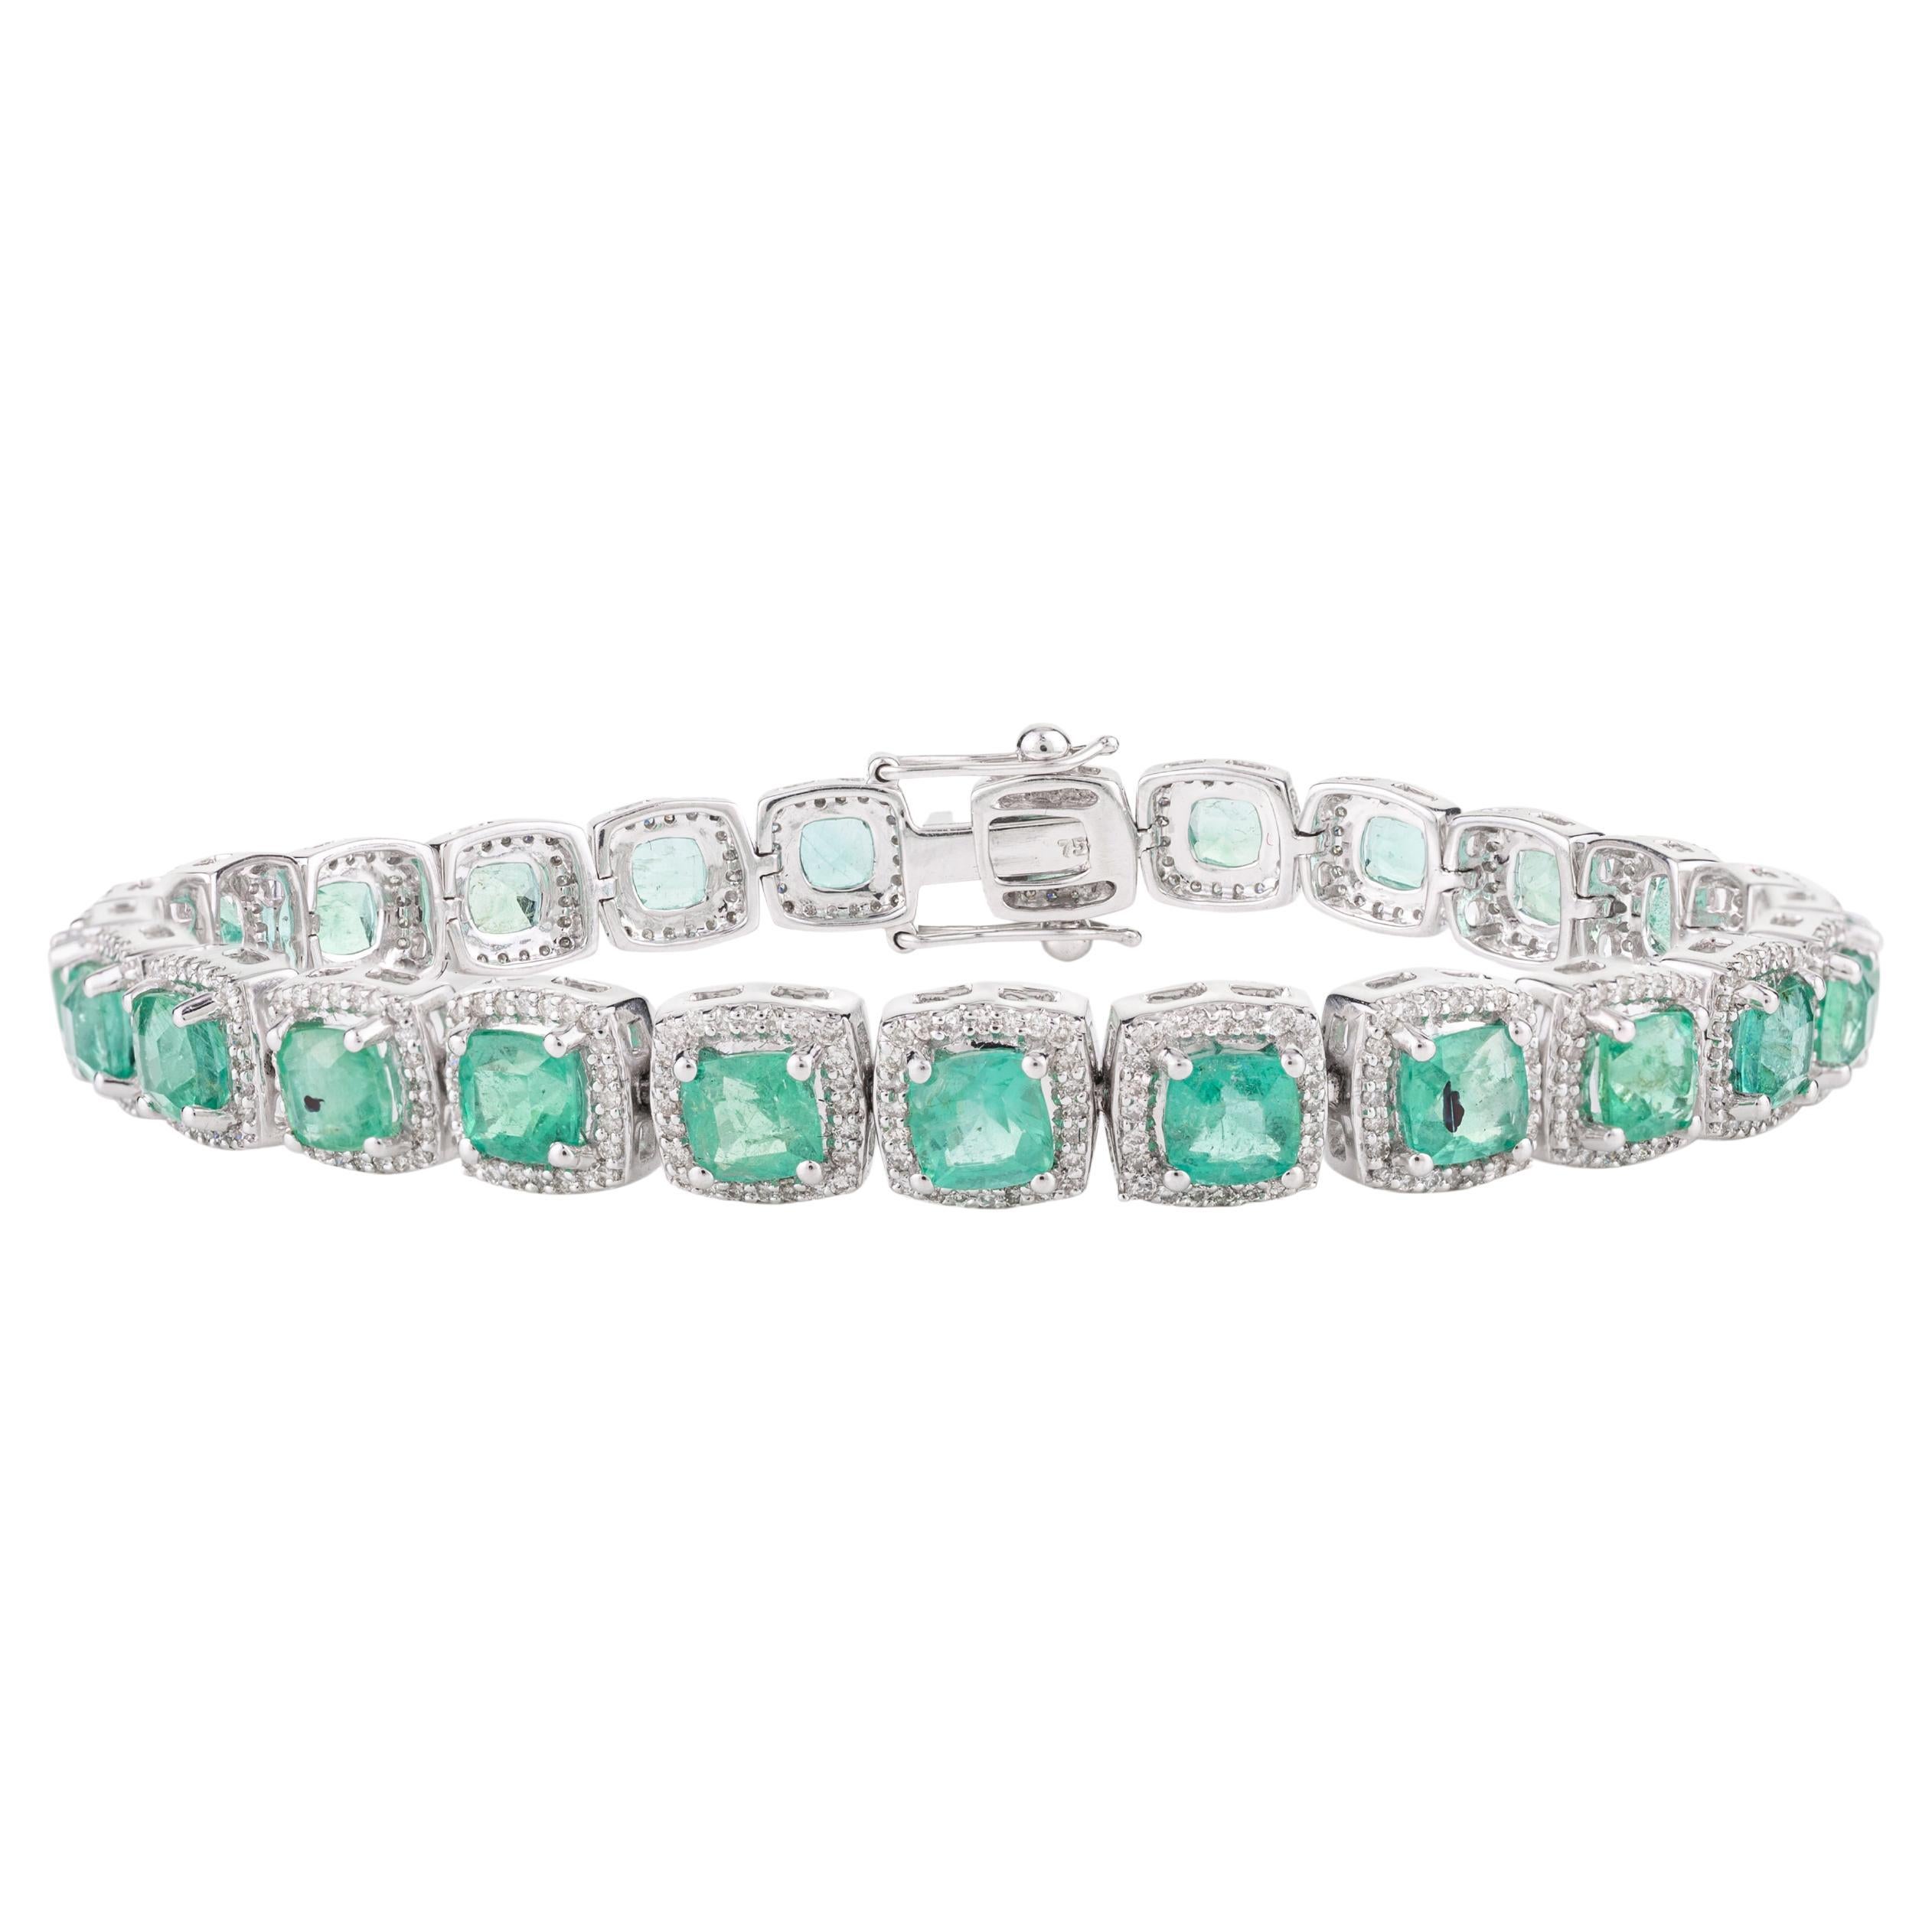 18k White Gold 10.01 Carat Emerald Diamond Halo Engagement Bracelet for Her